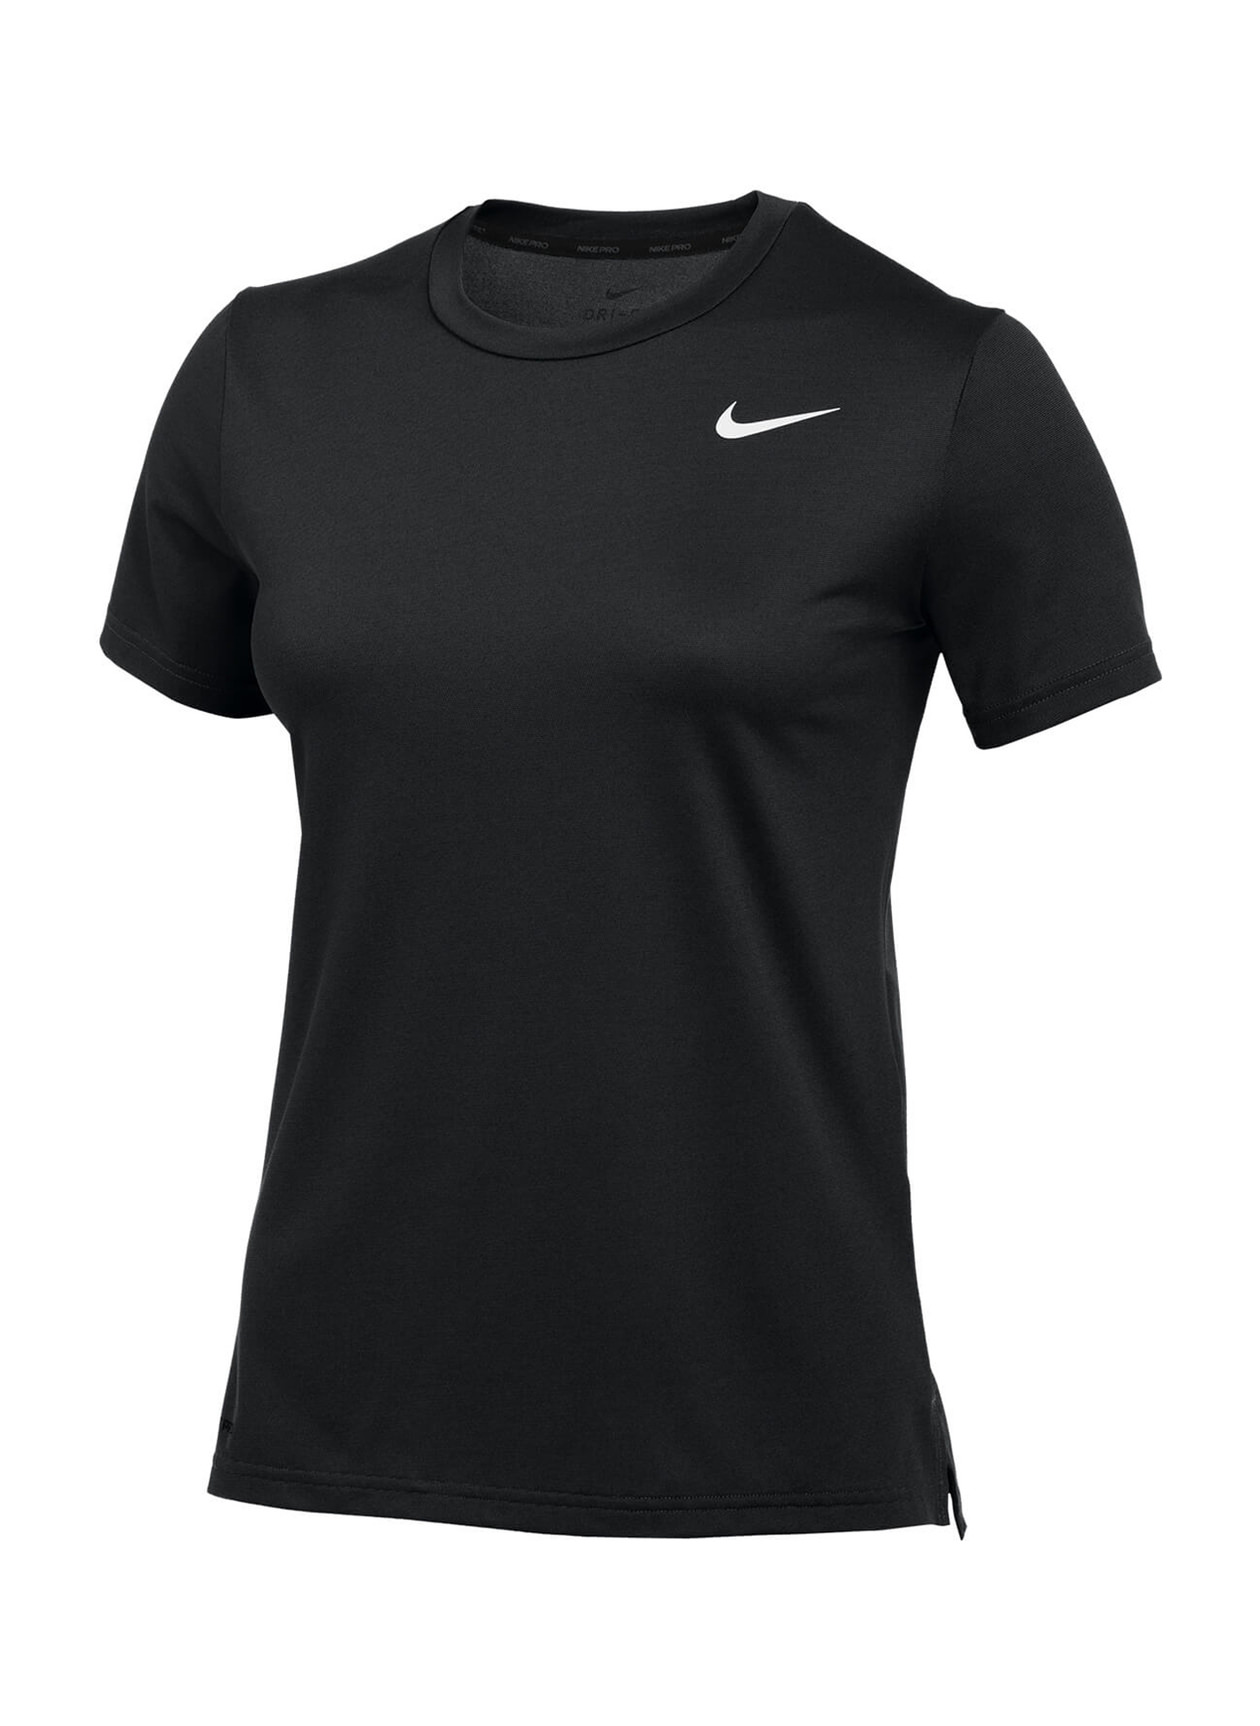 Custom T-shirts | Screen Printed Nike Women's Team Black / Heather Pro ...